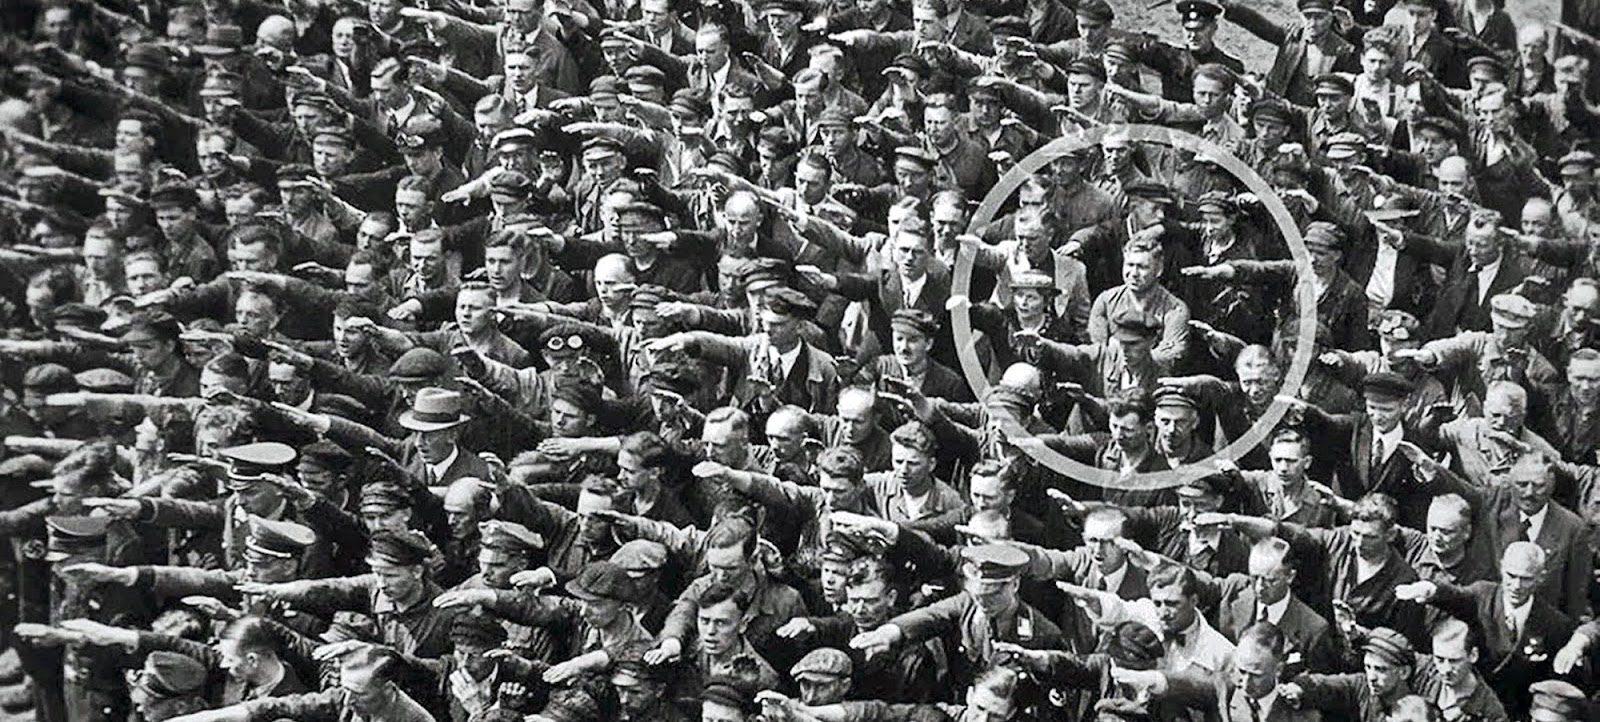 August Landmesser refusing to give Nazi salute